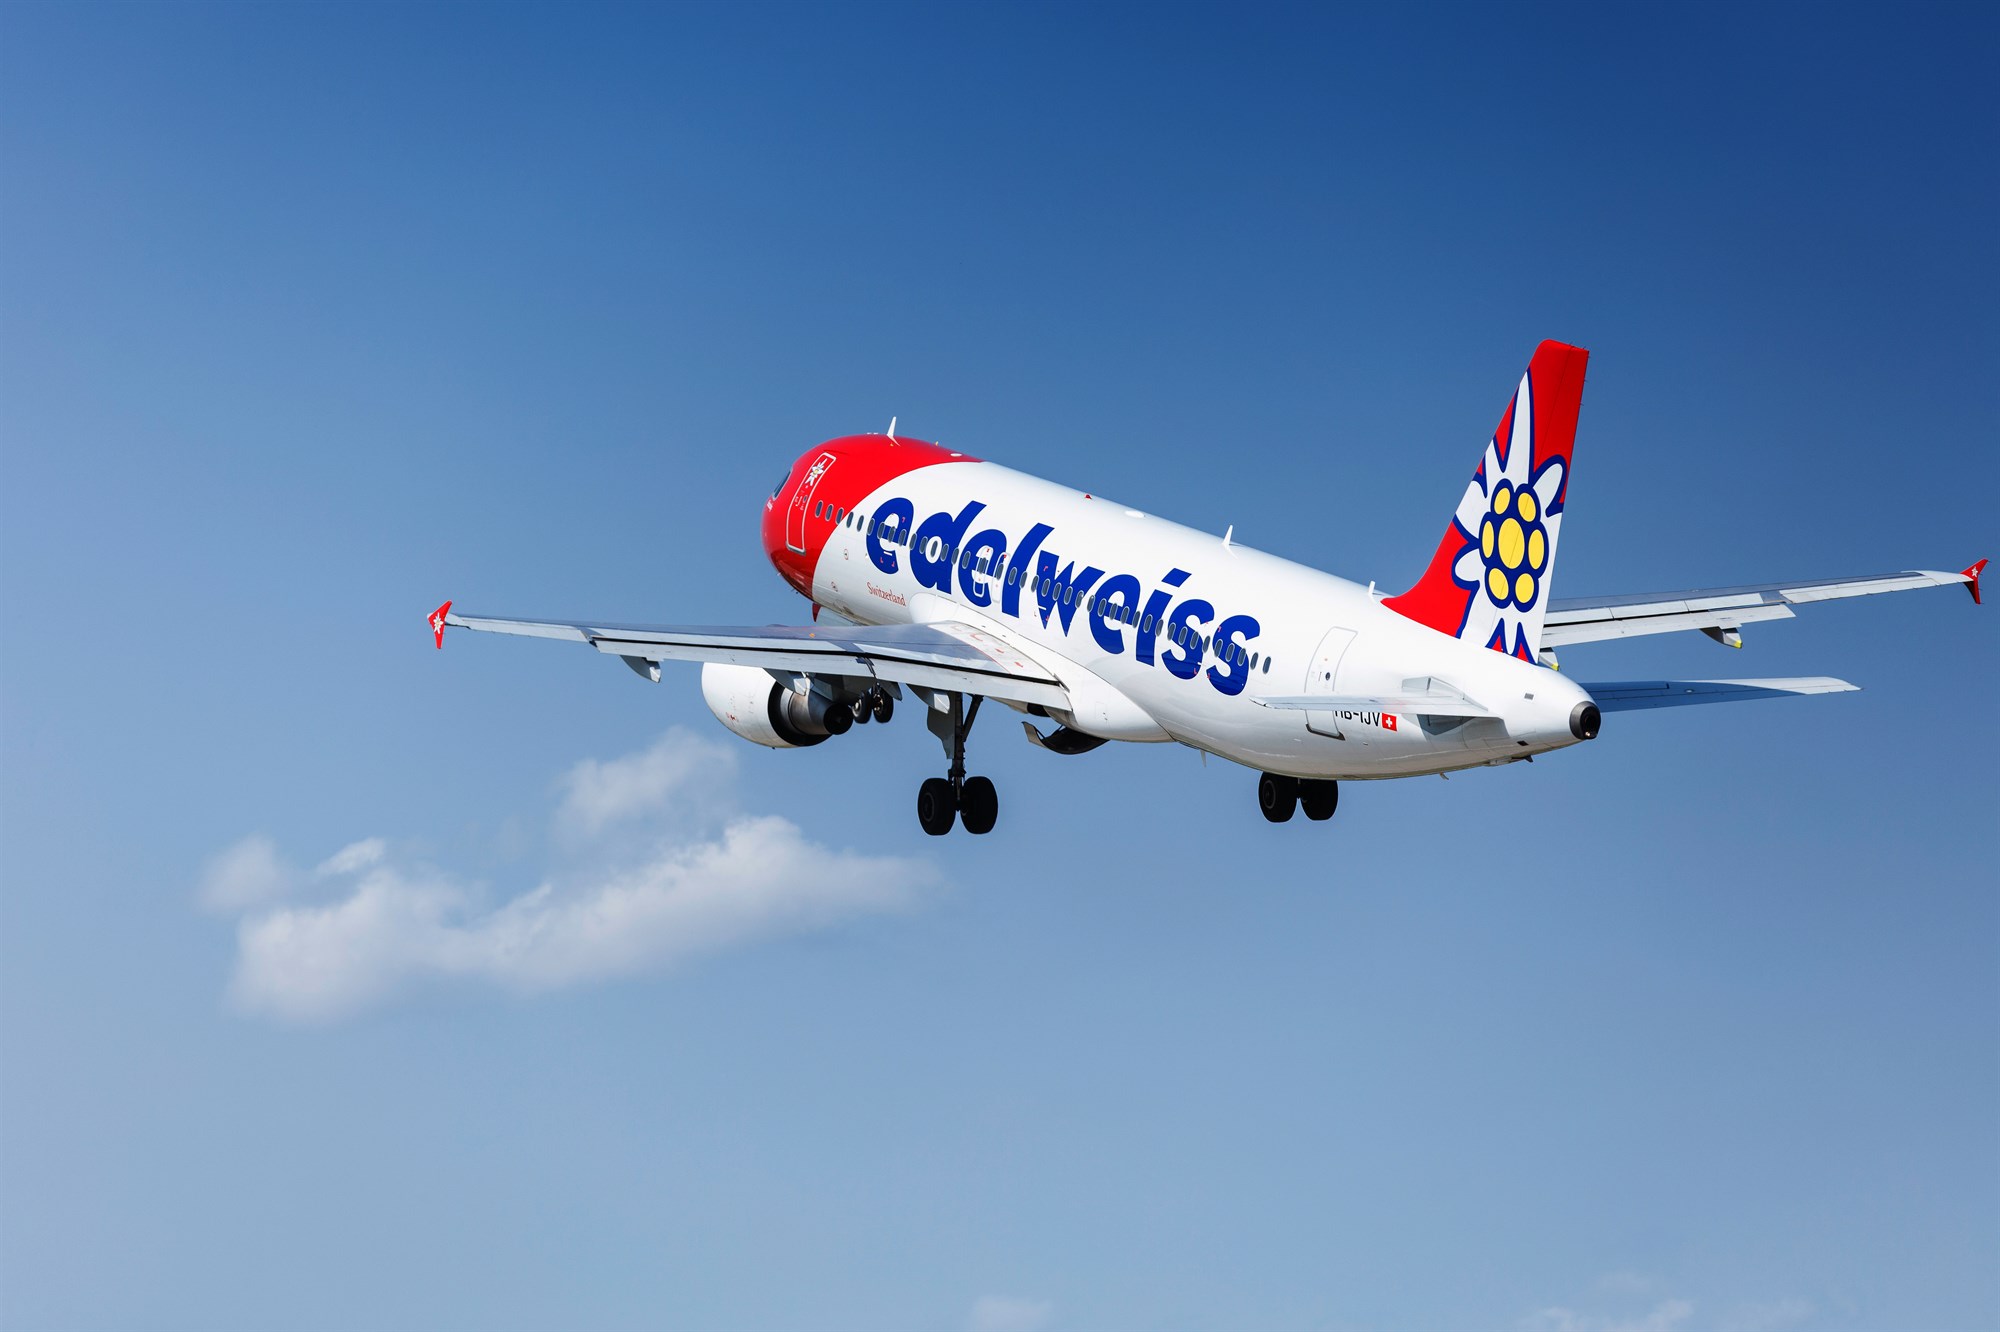 Swiss Airline Edelweiss flies to Akureyri in summer 2023